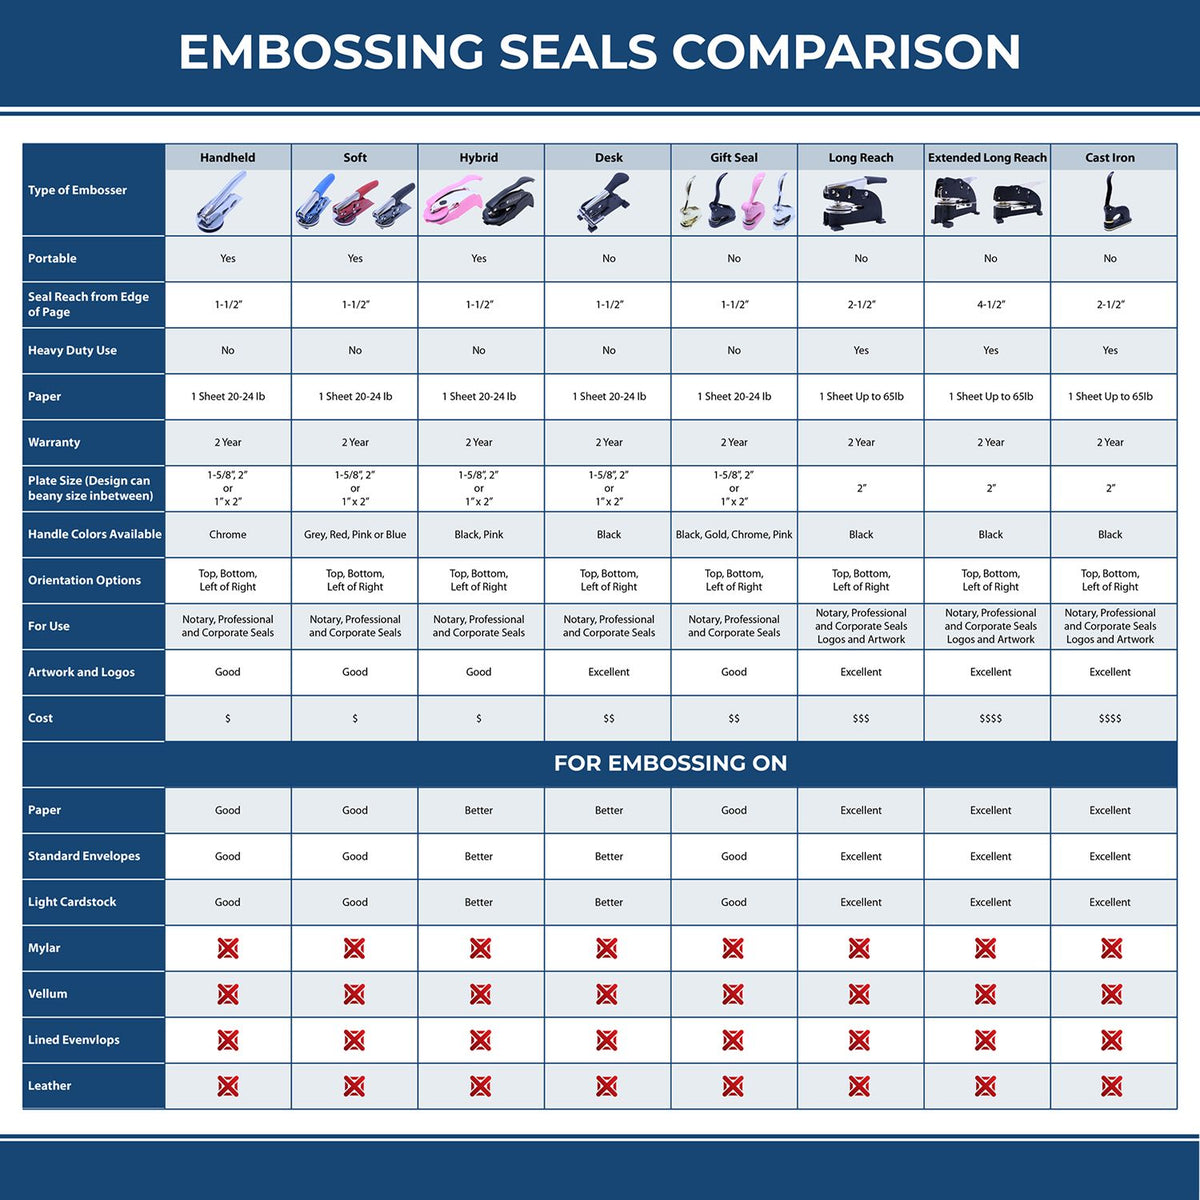 Engineering Geologist Gold Gift Seal Embosser 3026ENGEO Embossing Seal Comparison